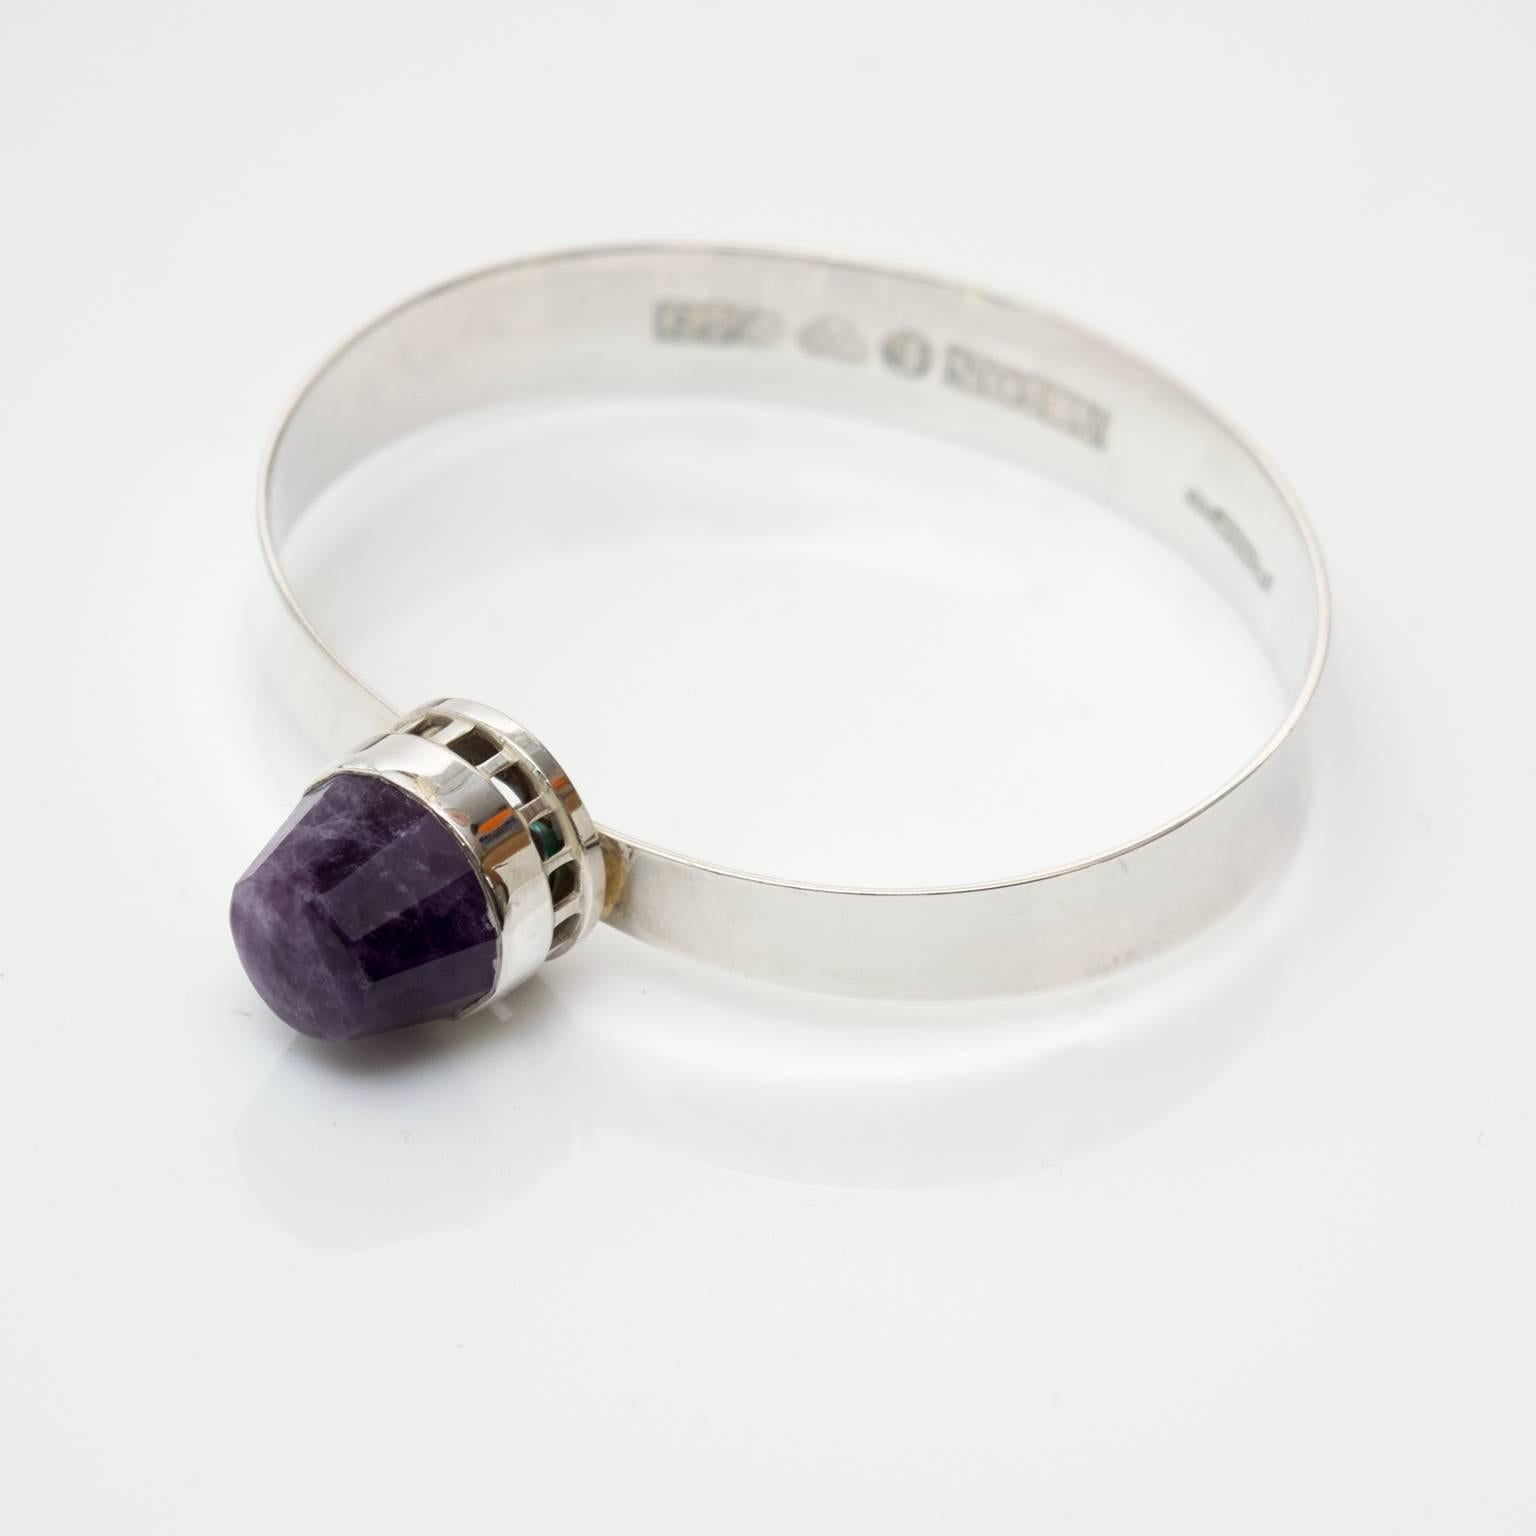 Scandinavian Modern, Sterling silver bracelet with a faceted purple colored gemstone. Designer stamped "Pege" Alton, made in Sweden, 1969.
Diameter: 2.5
Height: 3.25' ".